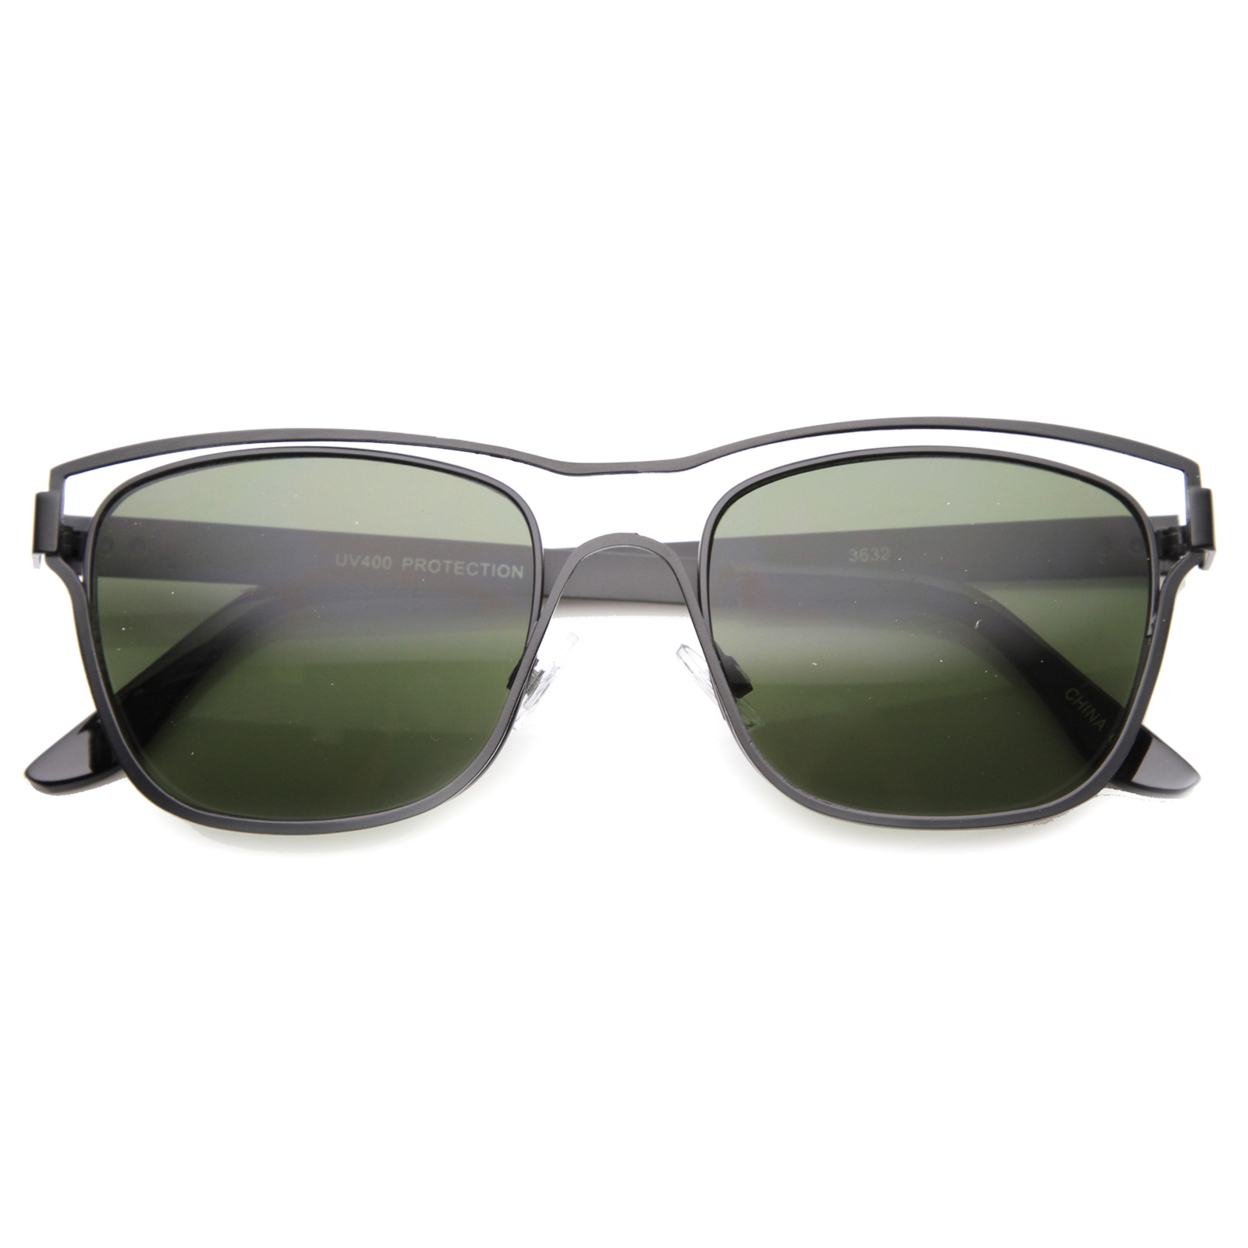 Unisex Horn Rimmed Sunglasses With UV400 Protected Composite Lens 9871 - Gunmetal / Lavender